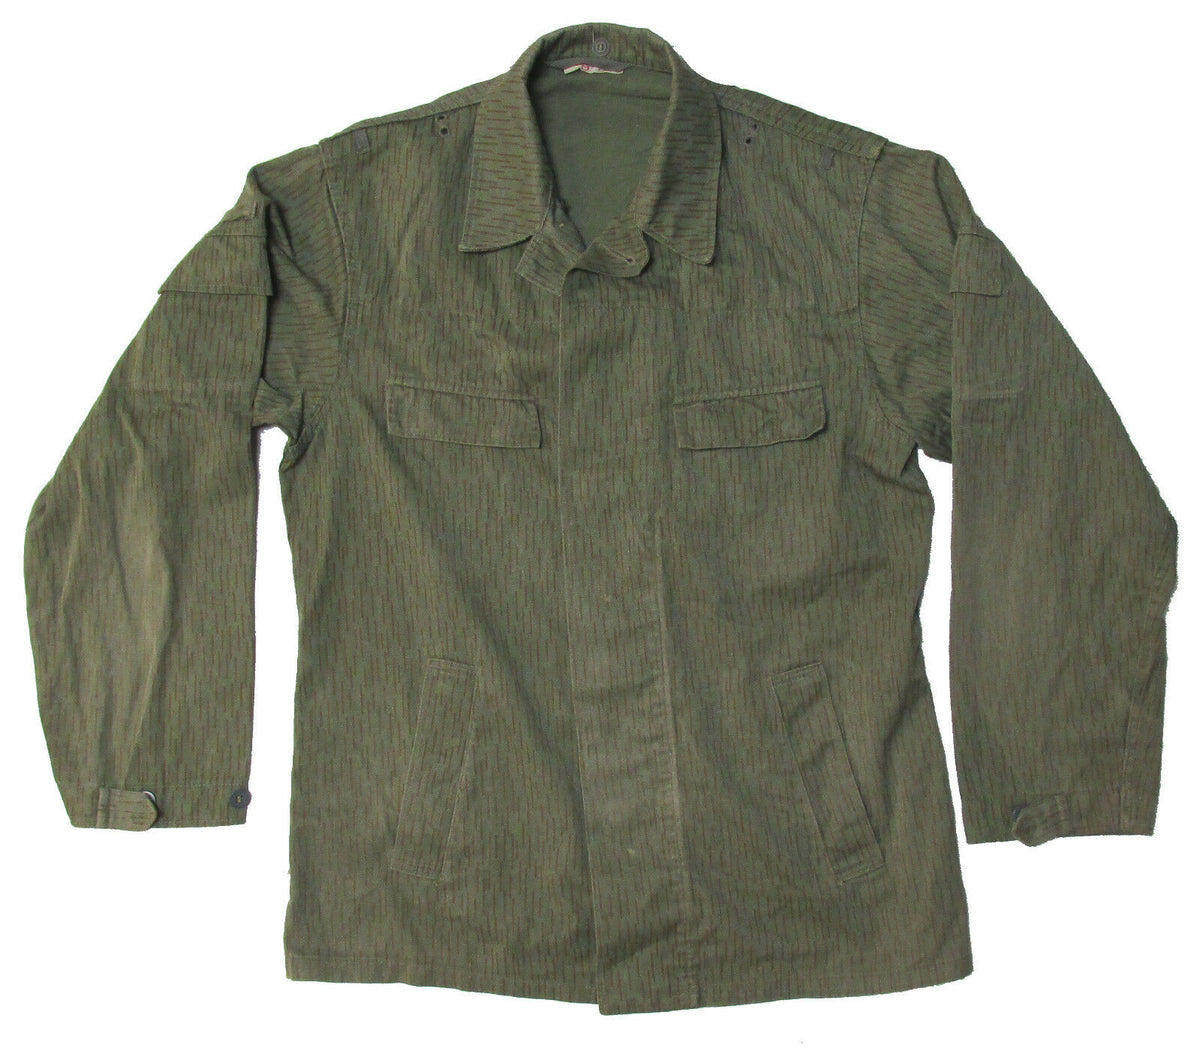 East German Military Jacket - Strichtarn Rain Camo Pattern